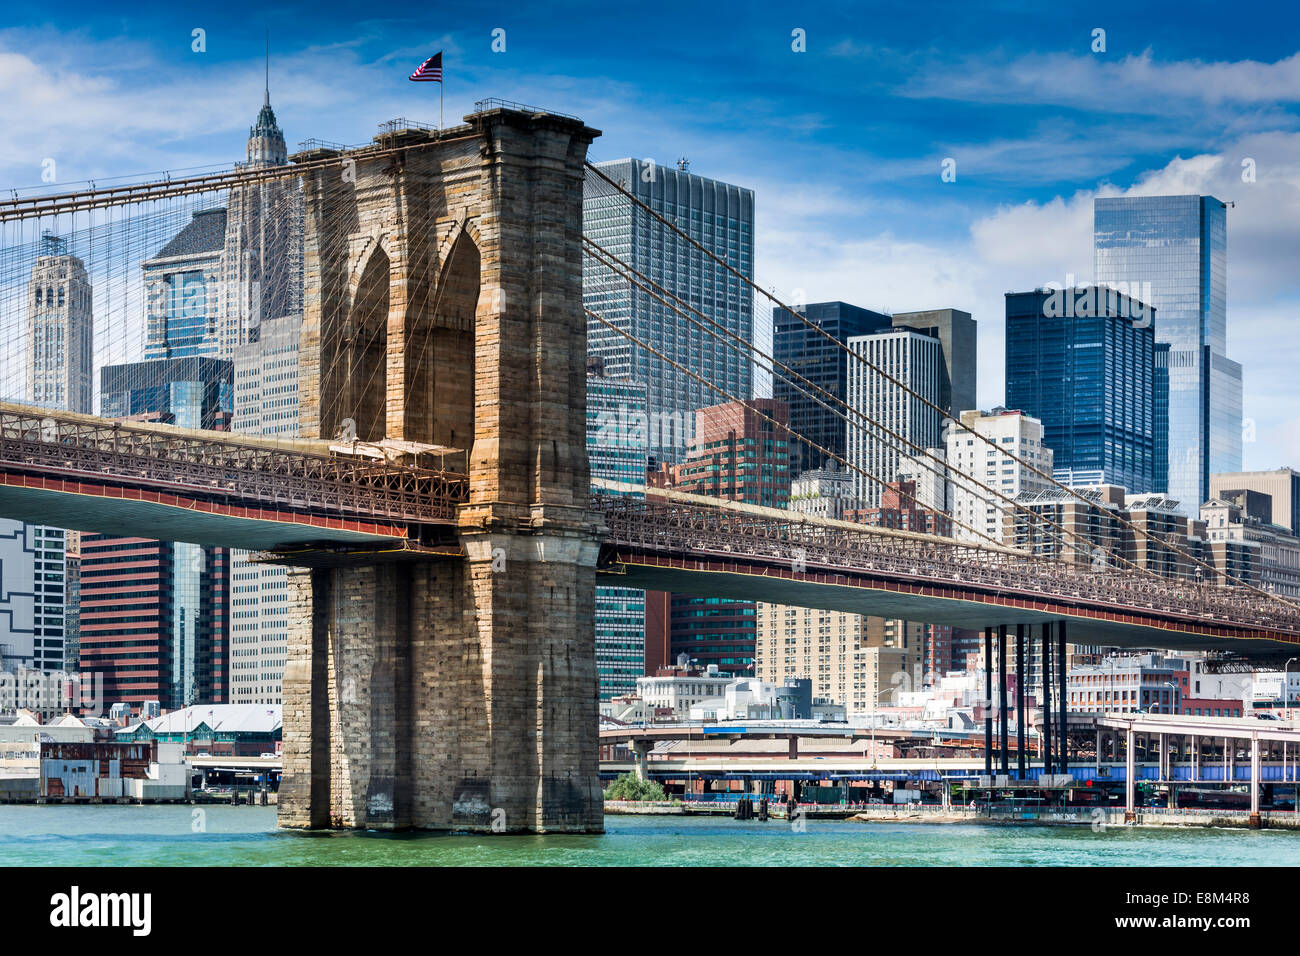 The Brooklyn Bridge, Manhattan, New York - USA Stock Photo